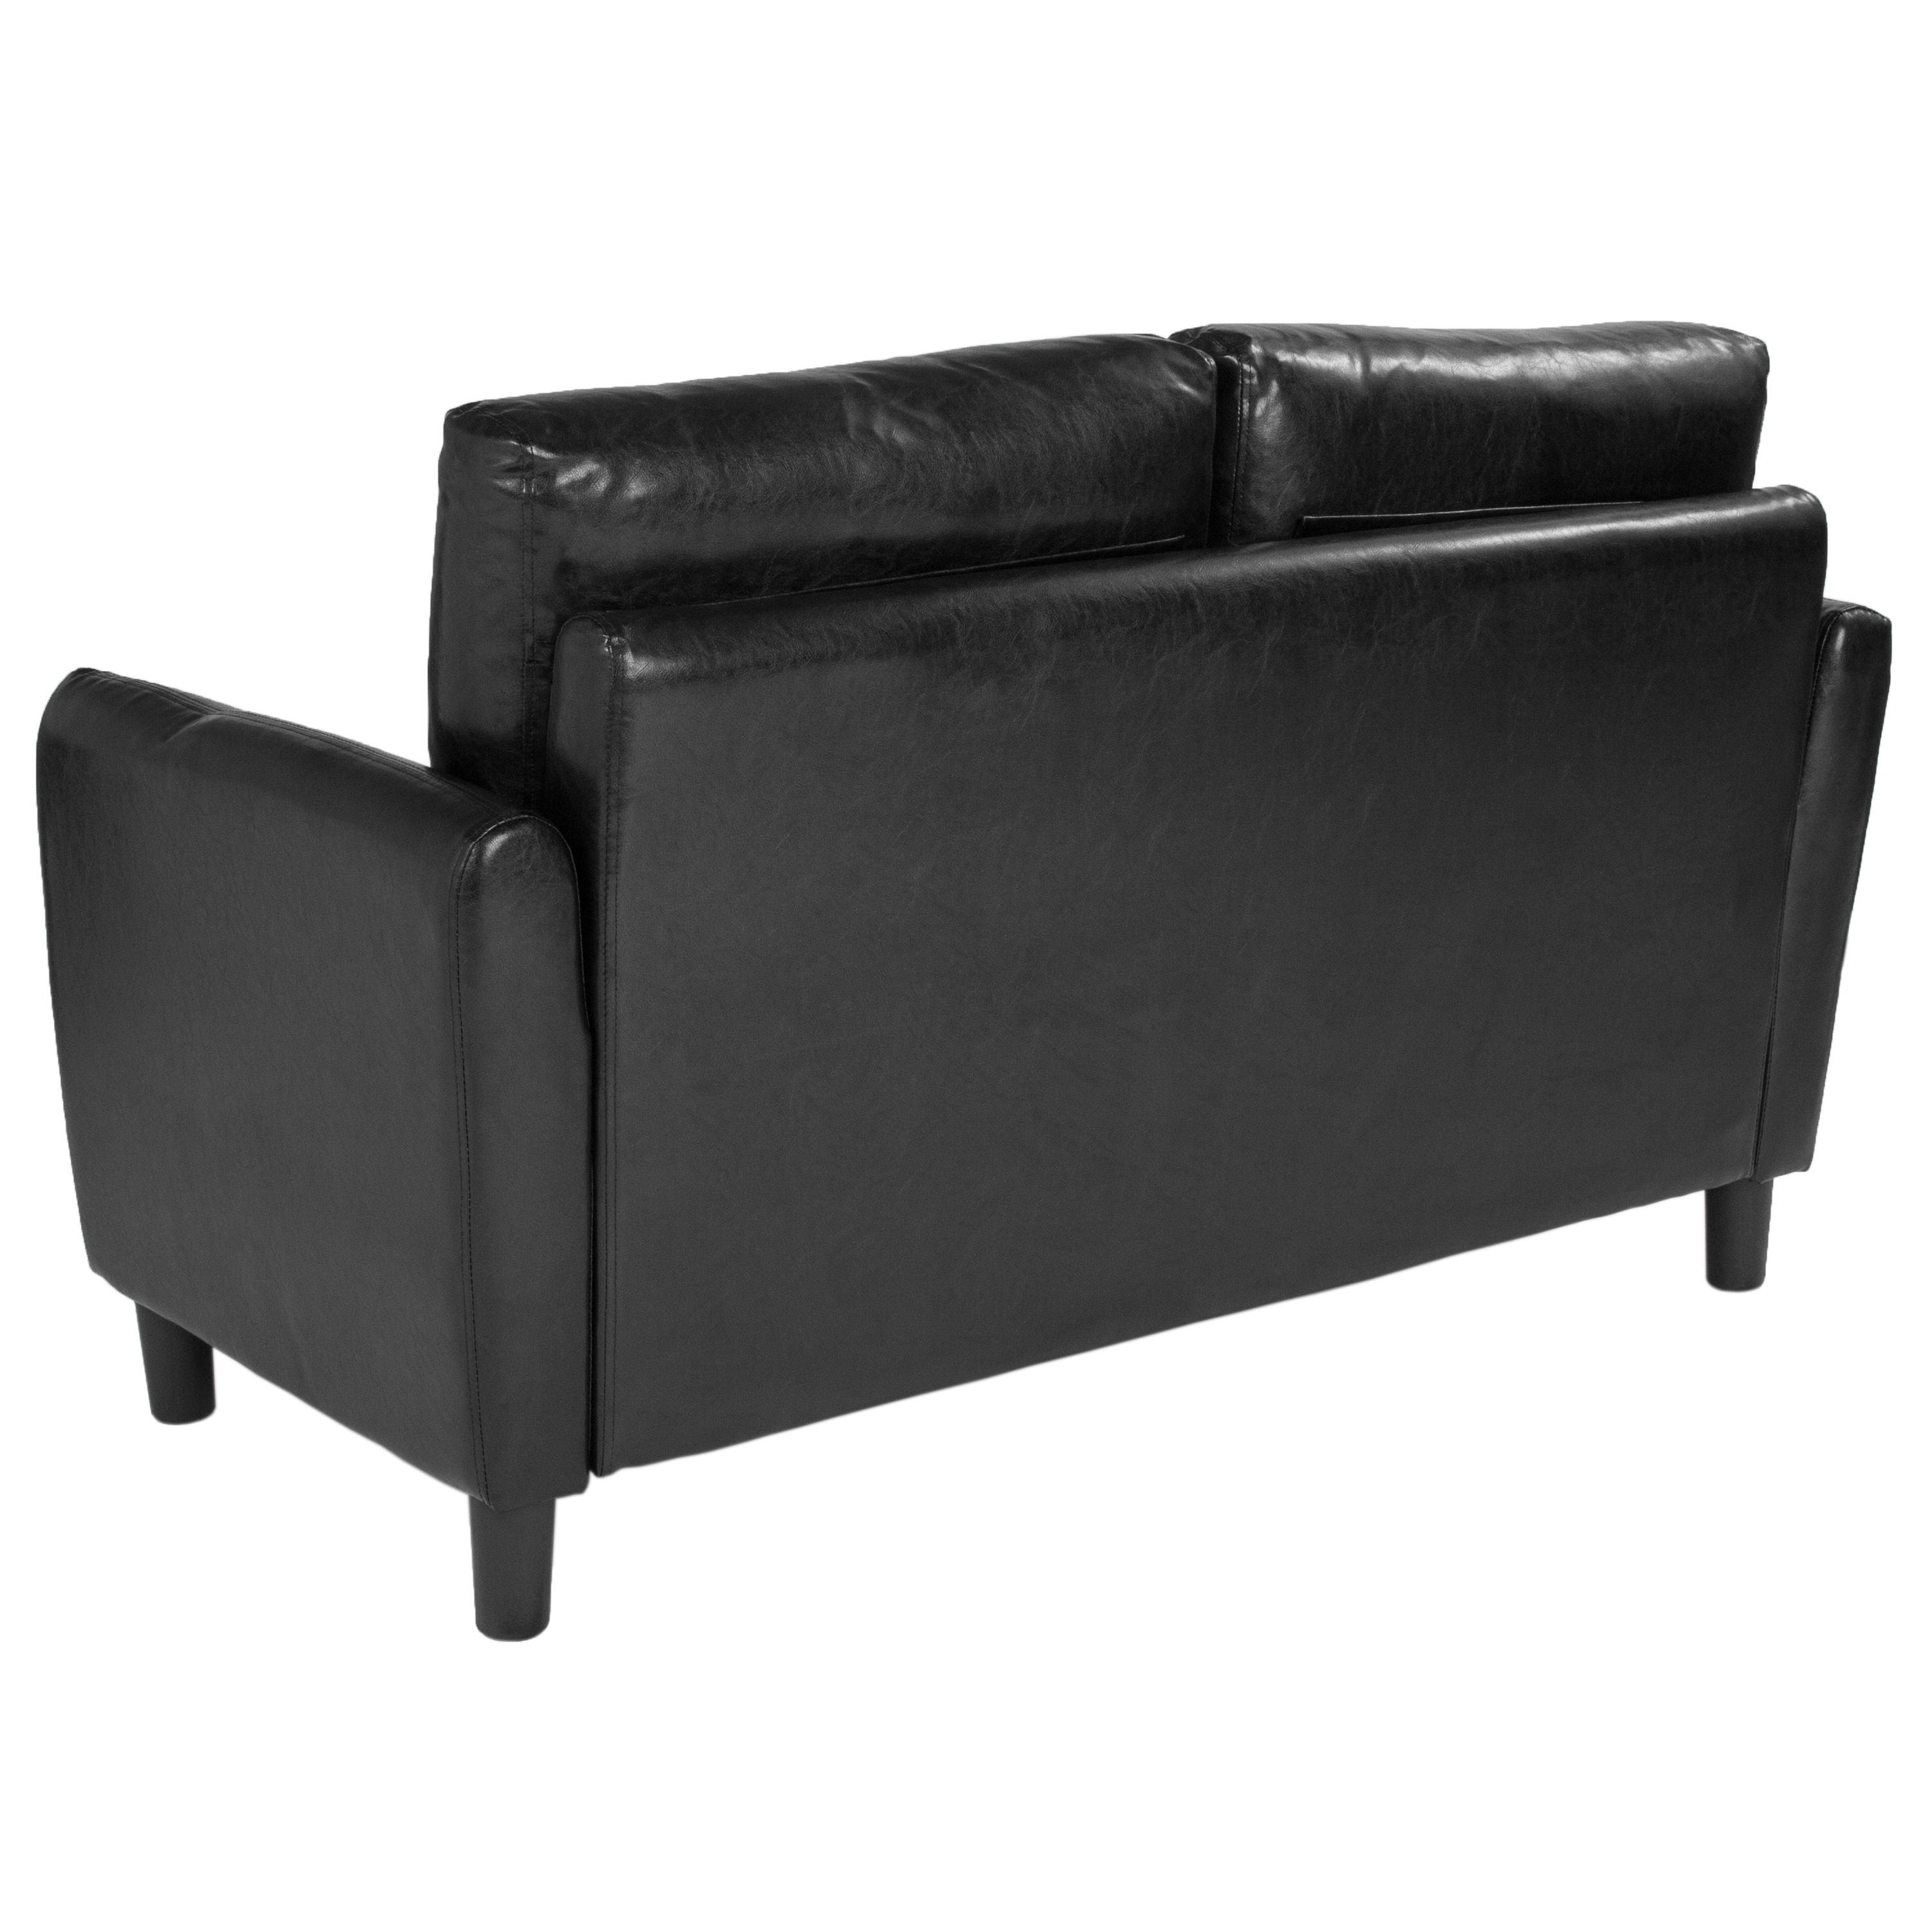 Flash Furniture Candler Park Upholstered Loveseat in Black LeatherSoft - image 3 of 5